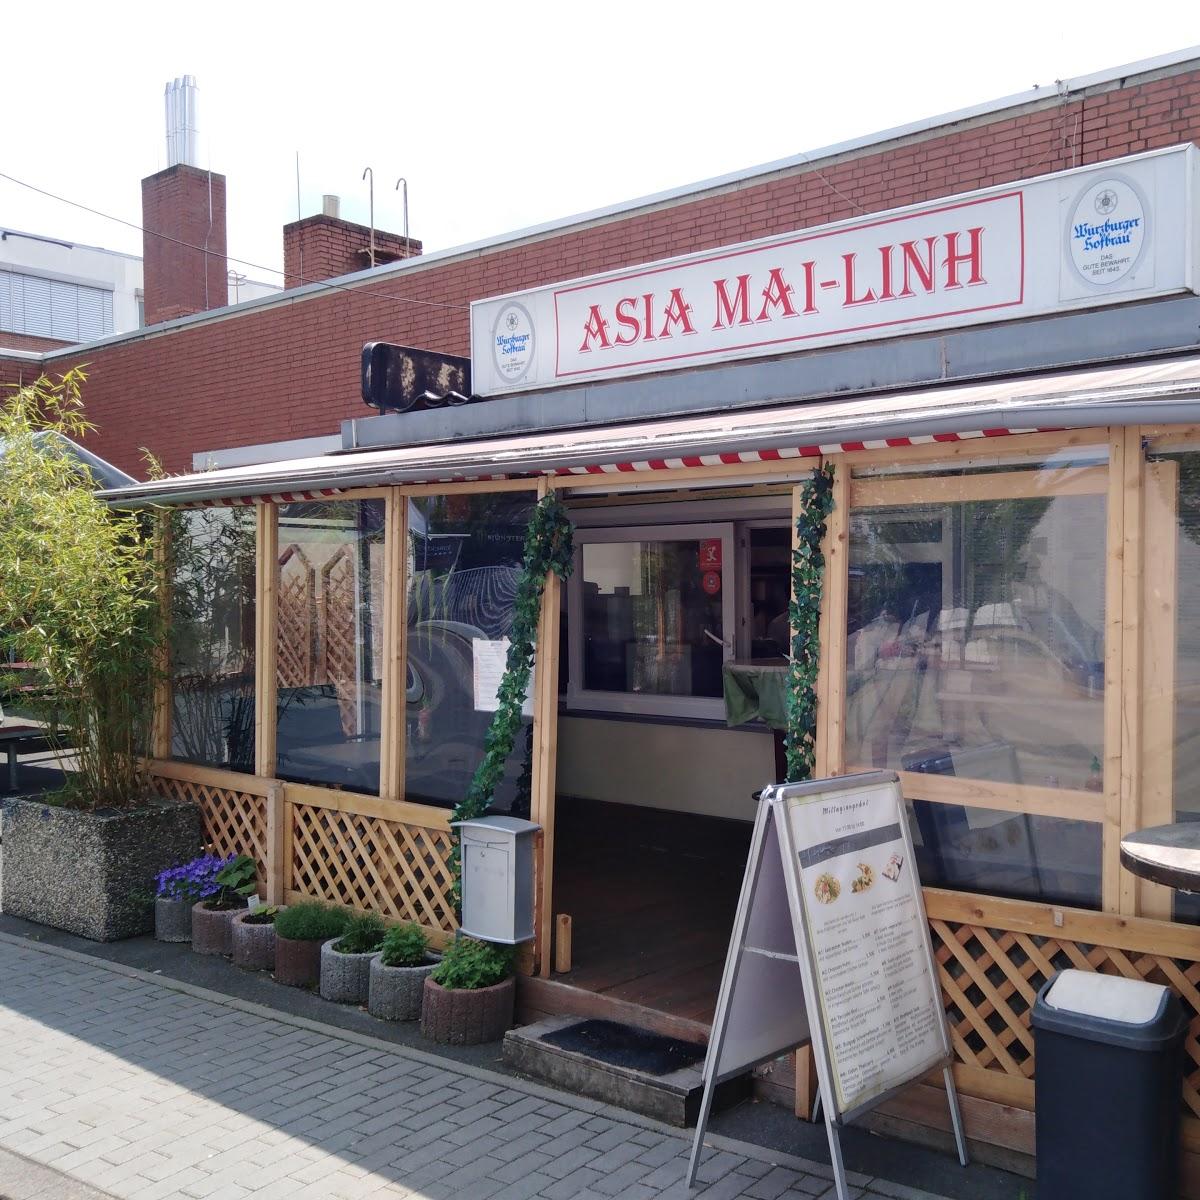 Restaurant "Asia Mai-Linh" in  Mainz